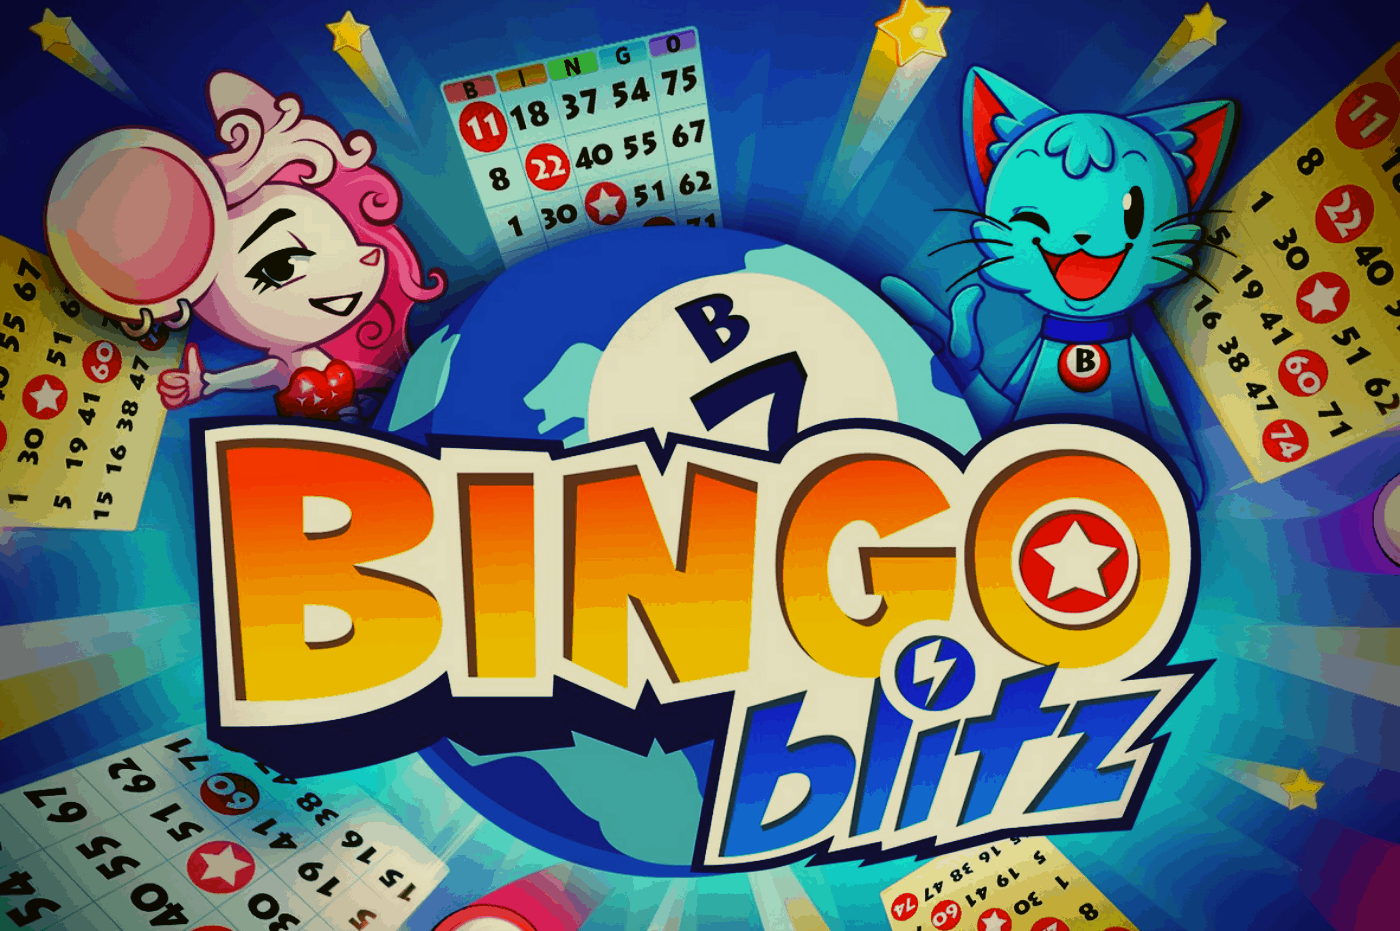 How to play bingo blitz on facebook